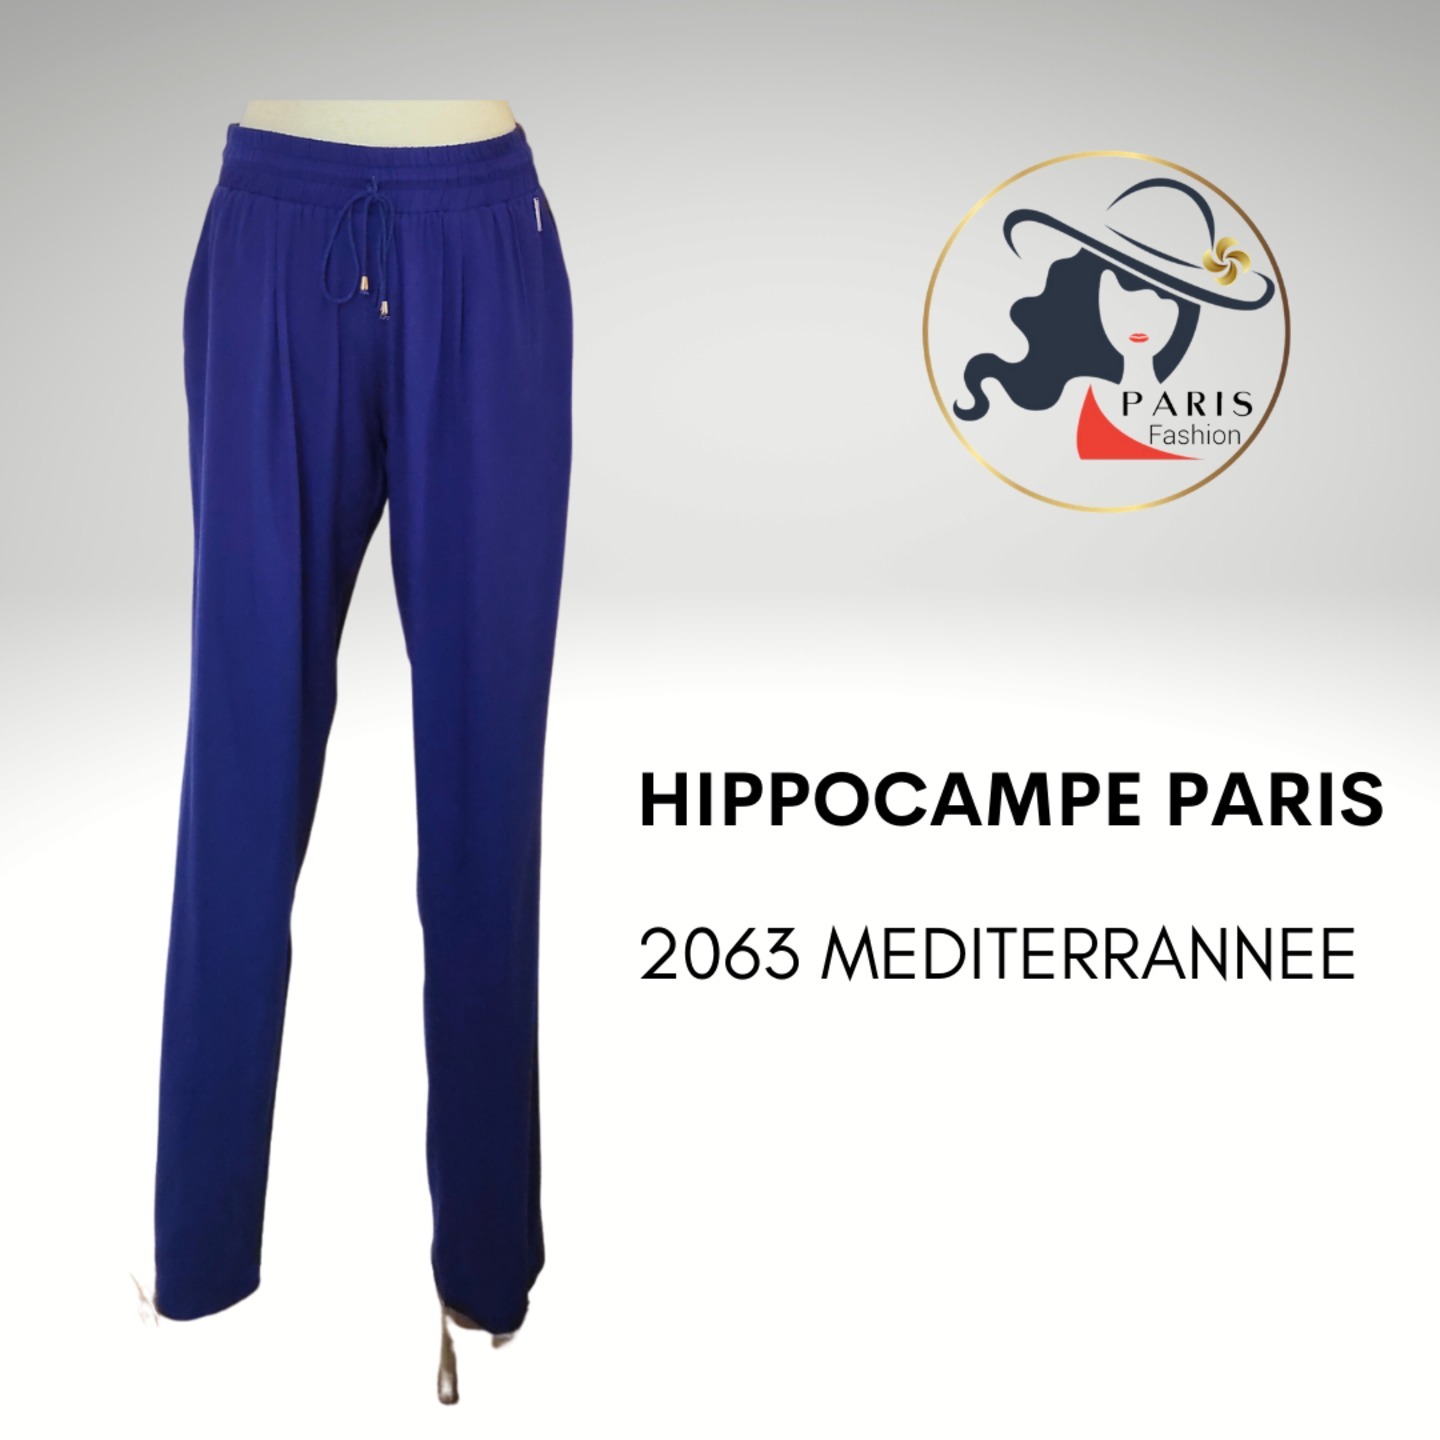 HIPPOCAMPE PARIS 2063 MEDITERRANNEE DRAWSTRING PANTS WITH POCKETS